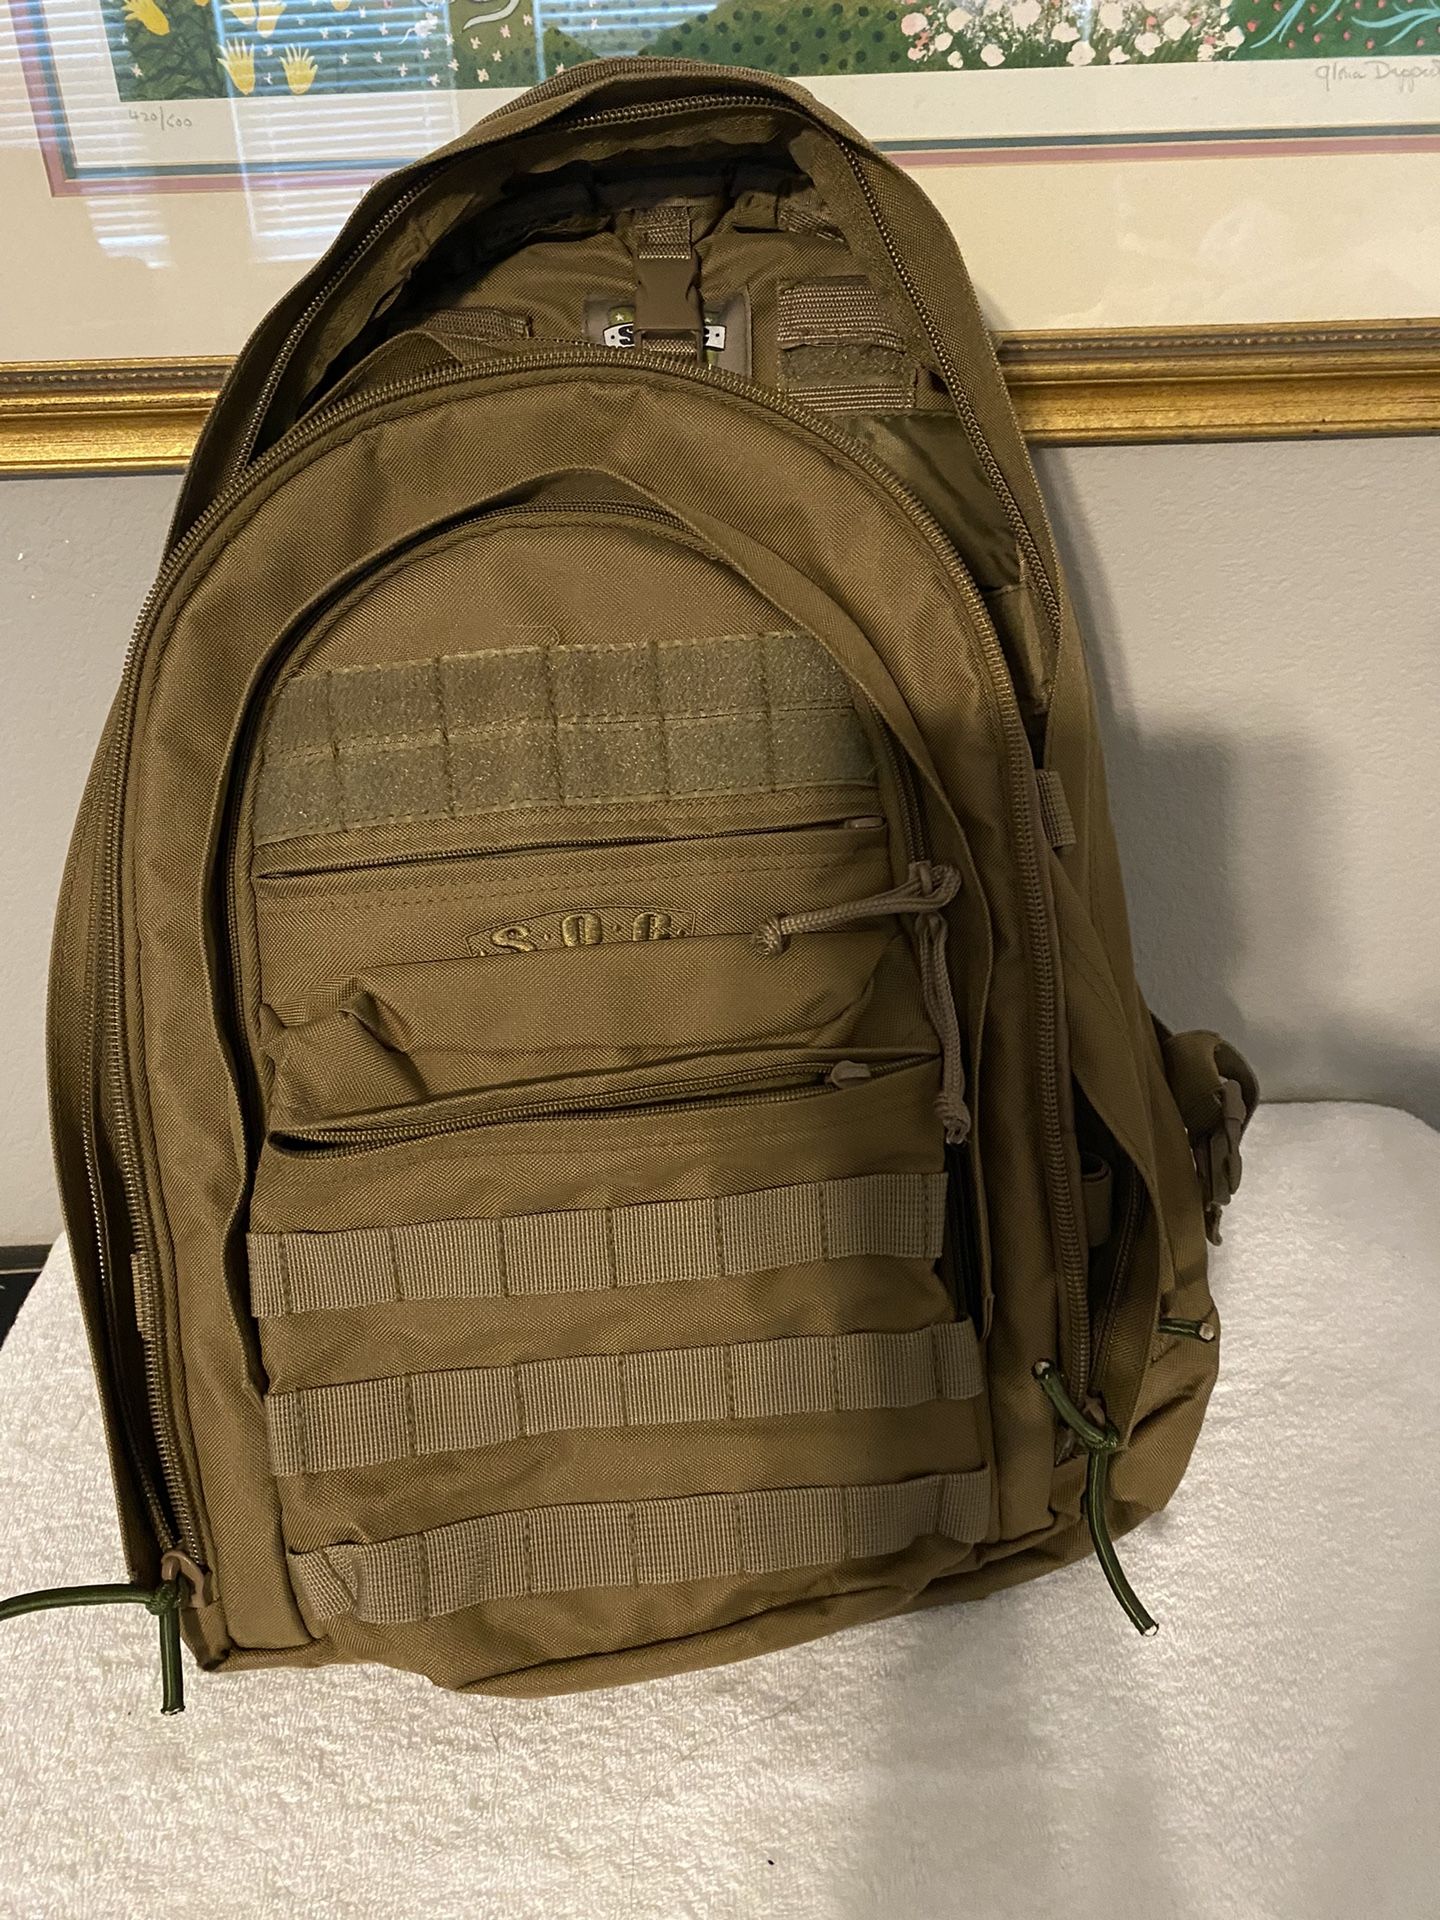 Military Backpack $20